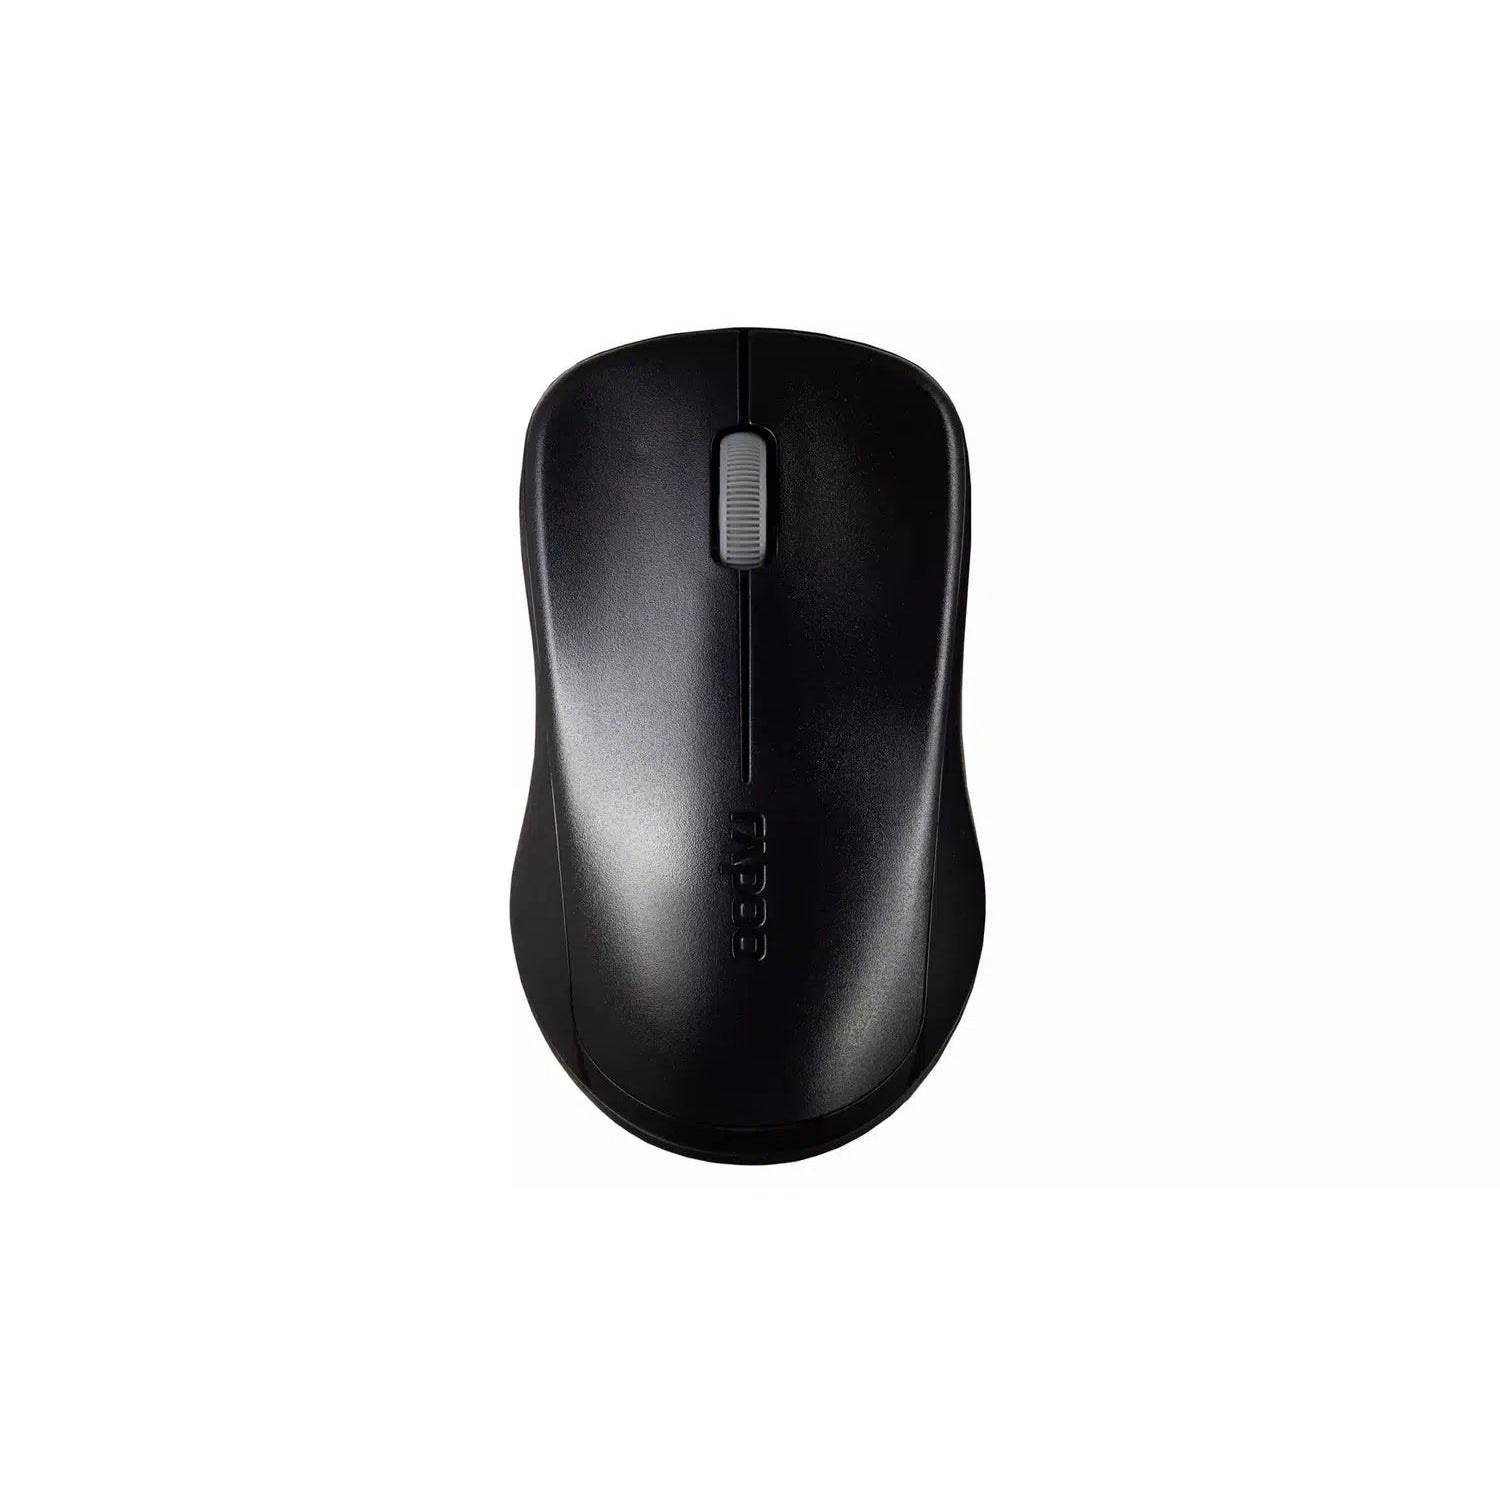 Rapoo 1620 Wireless Optical Mouse - Black - Refurbished Pristine